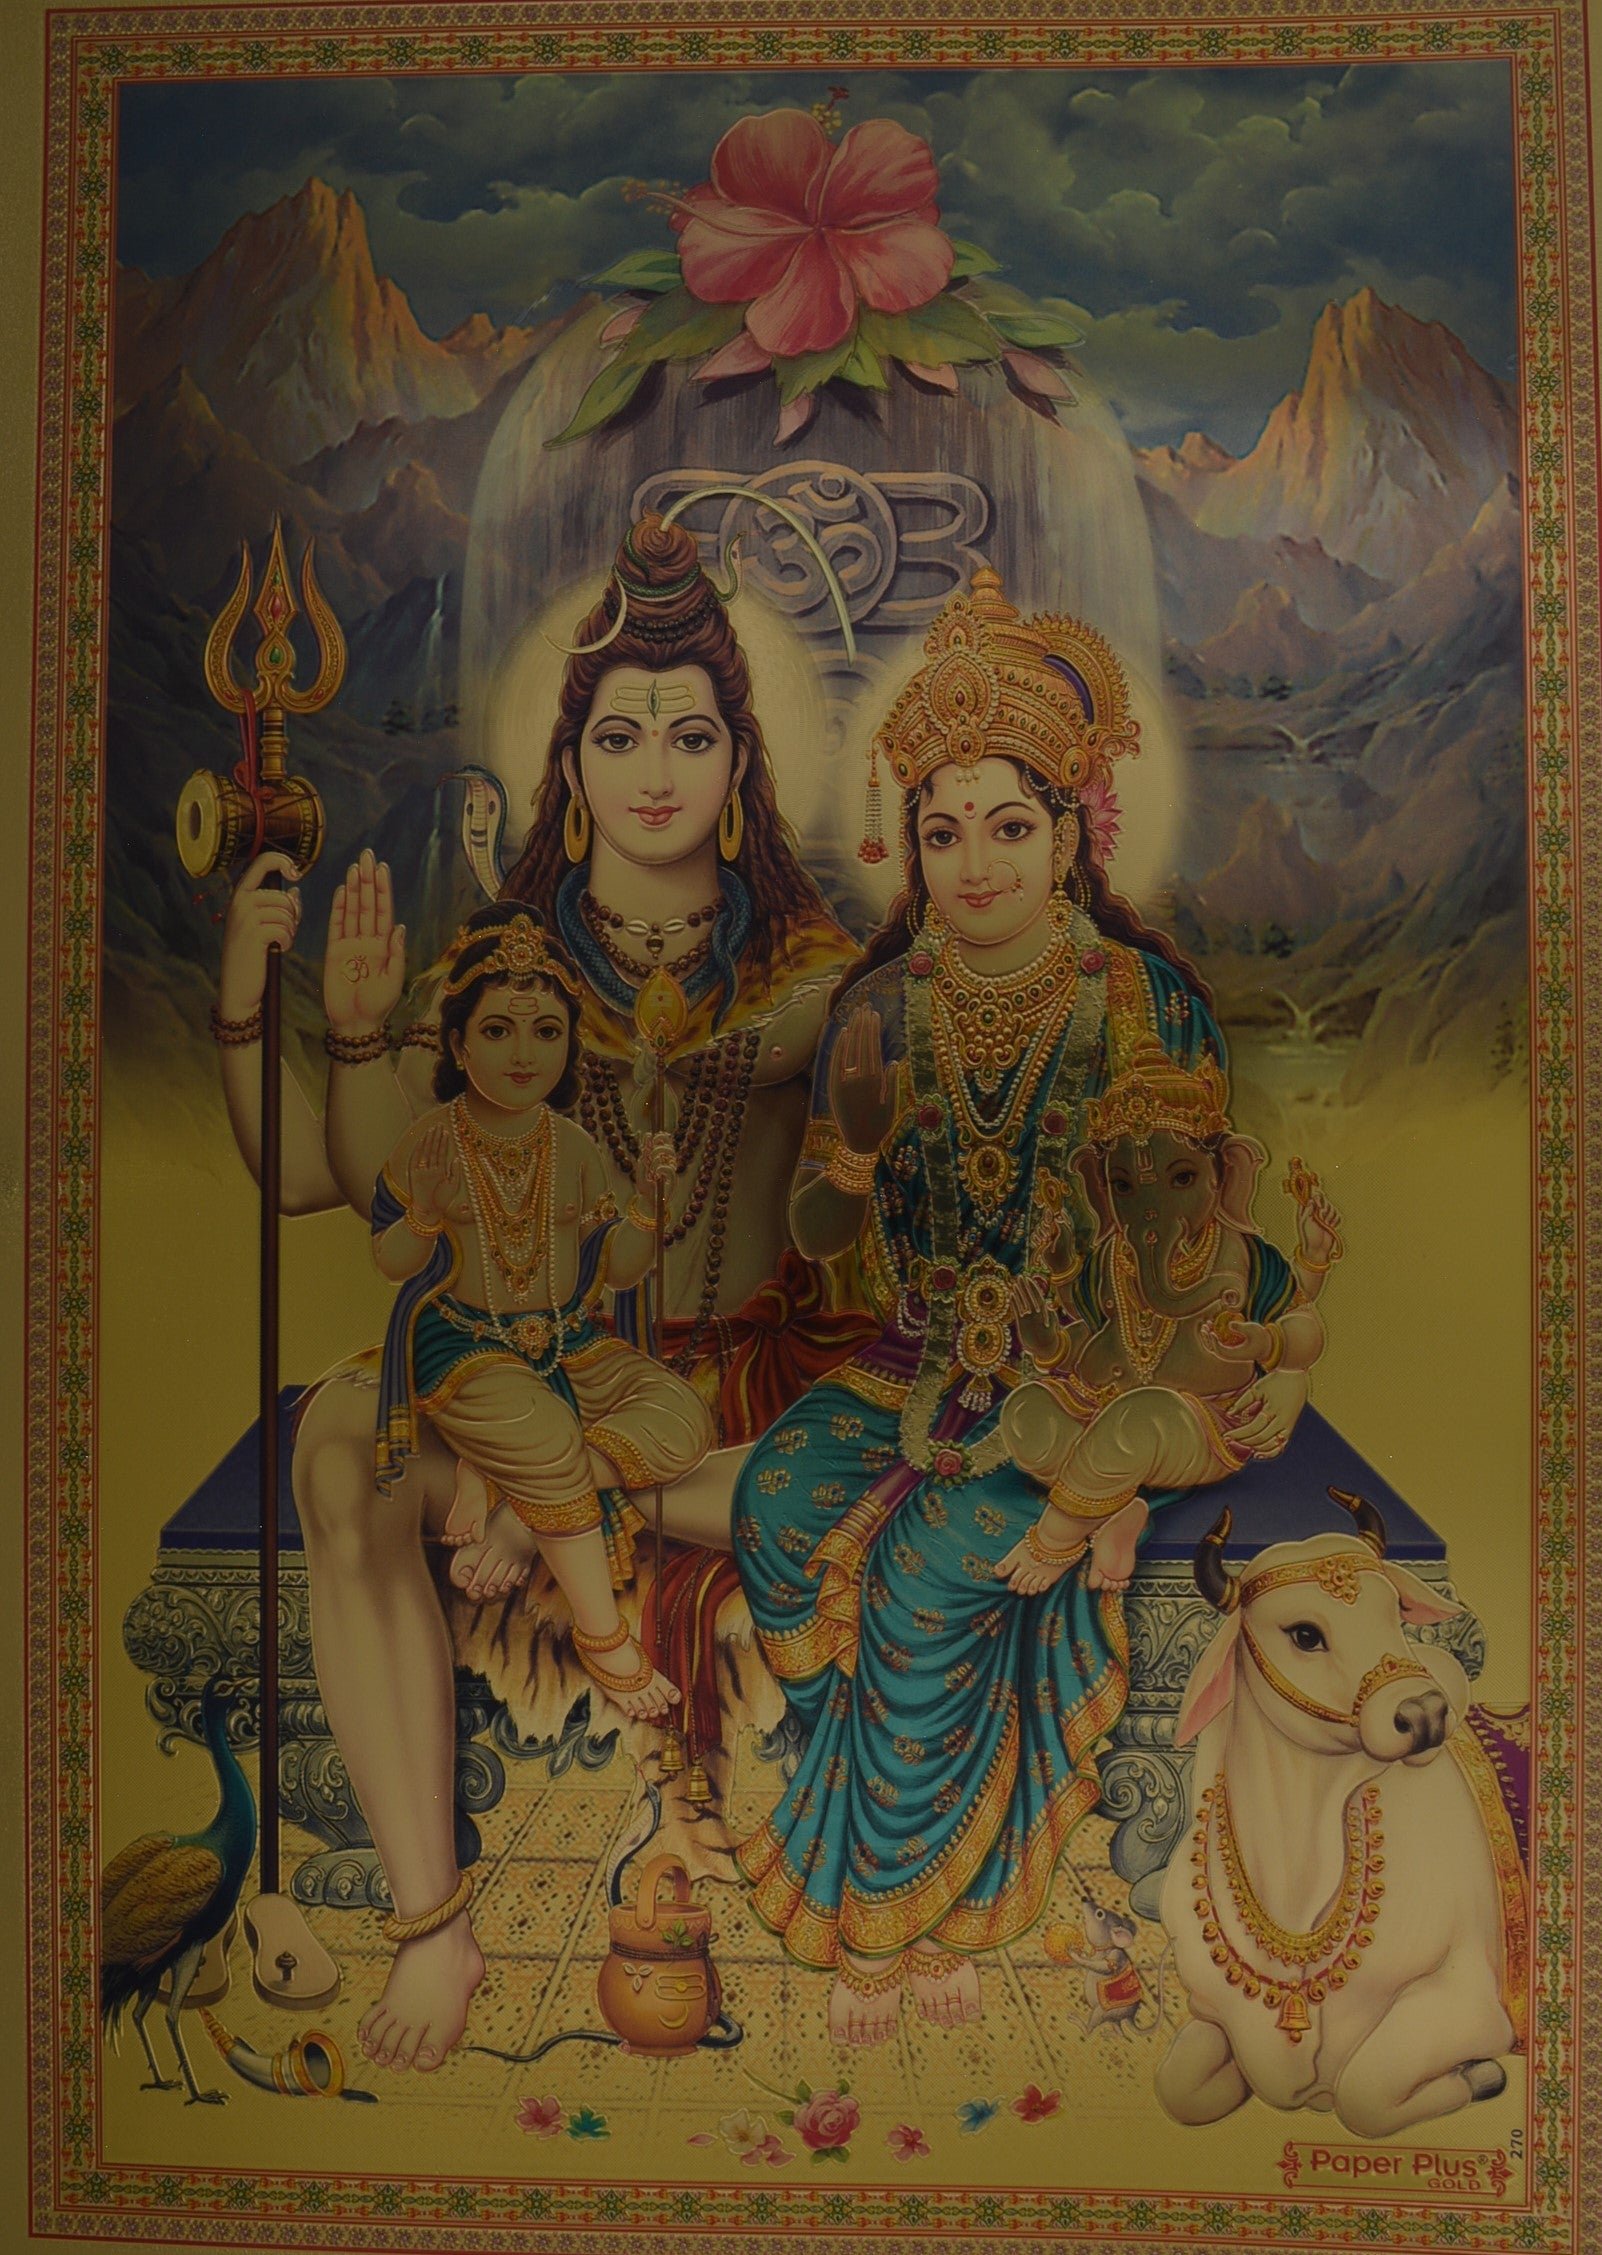 Lord Shiva with Ganesha, Kartikya and Maa Parvati Poster Size 8.5